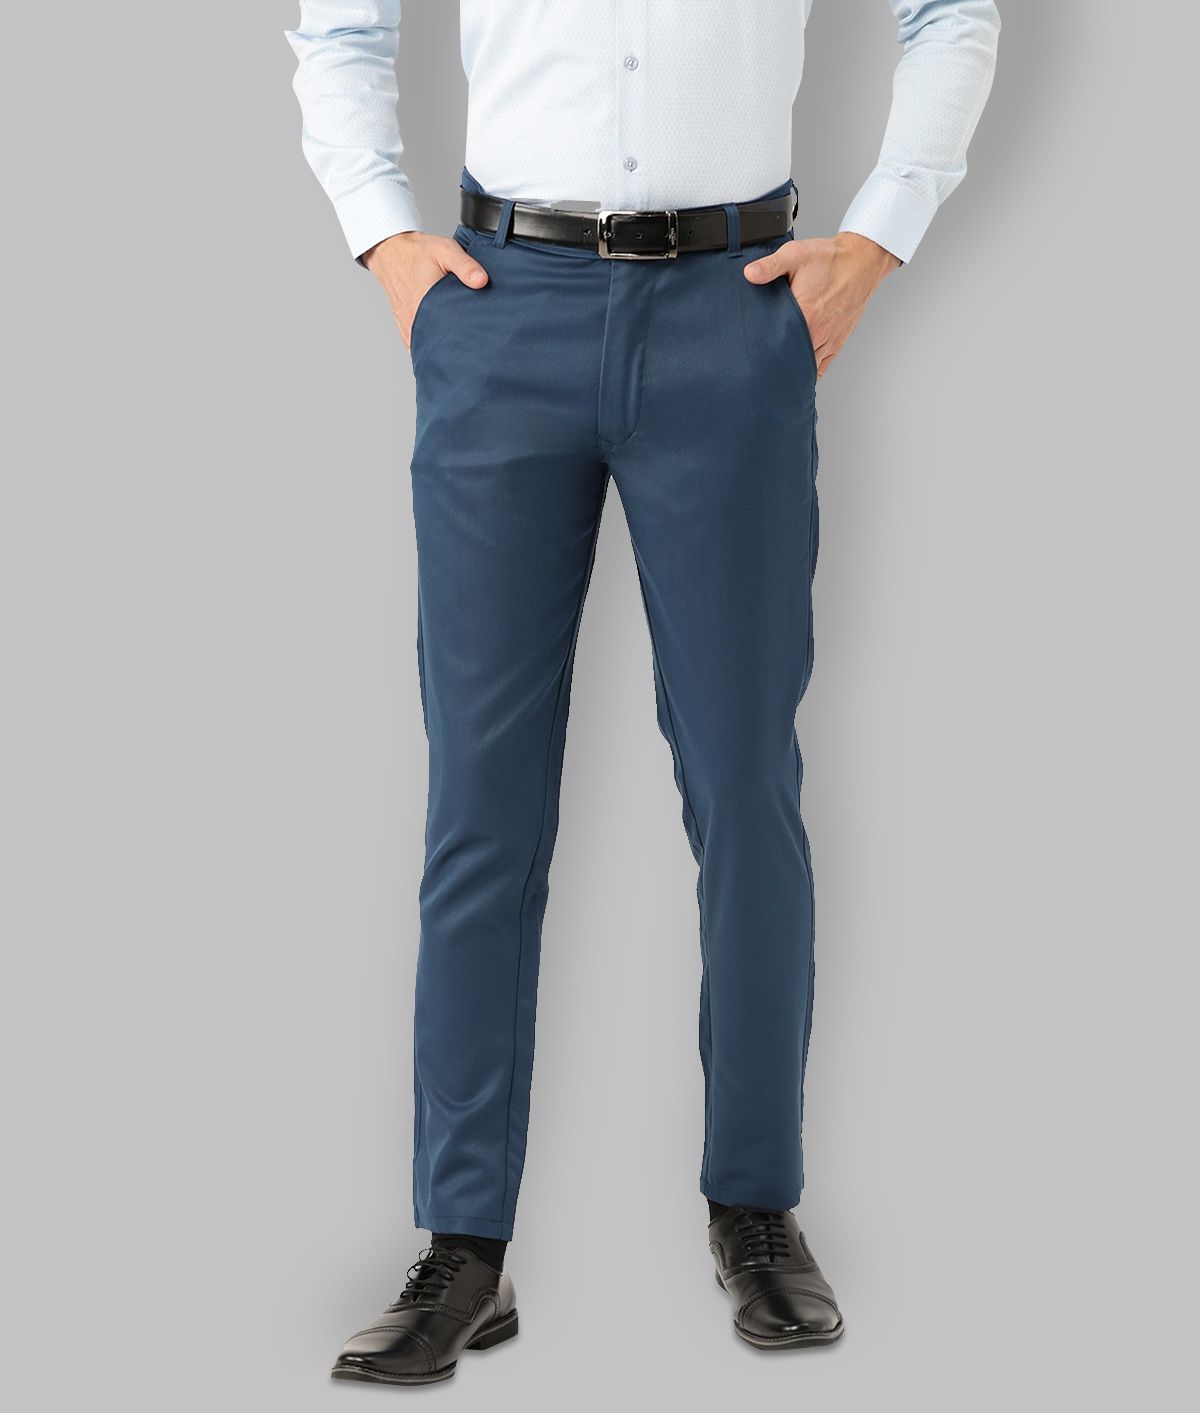     			Haul Chic - Indigo Blue Polycotton Slim - Fit Men's Formal Pants ( Pack of 1 )